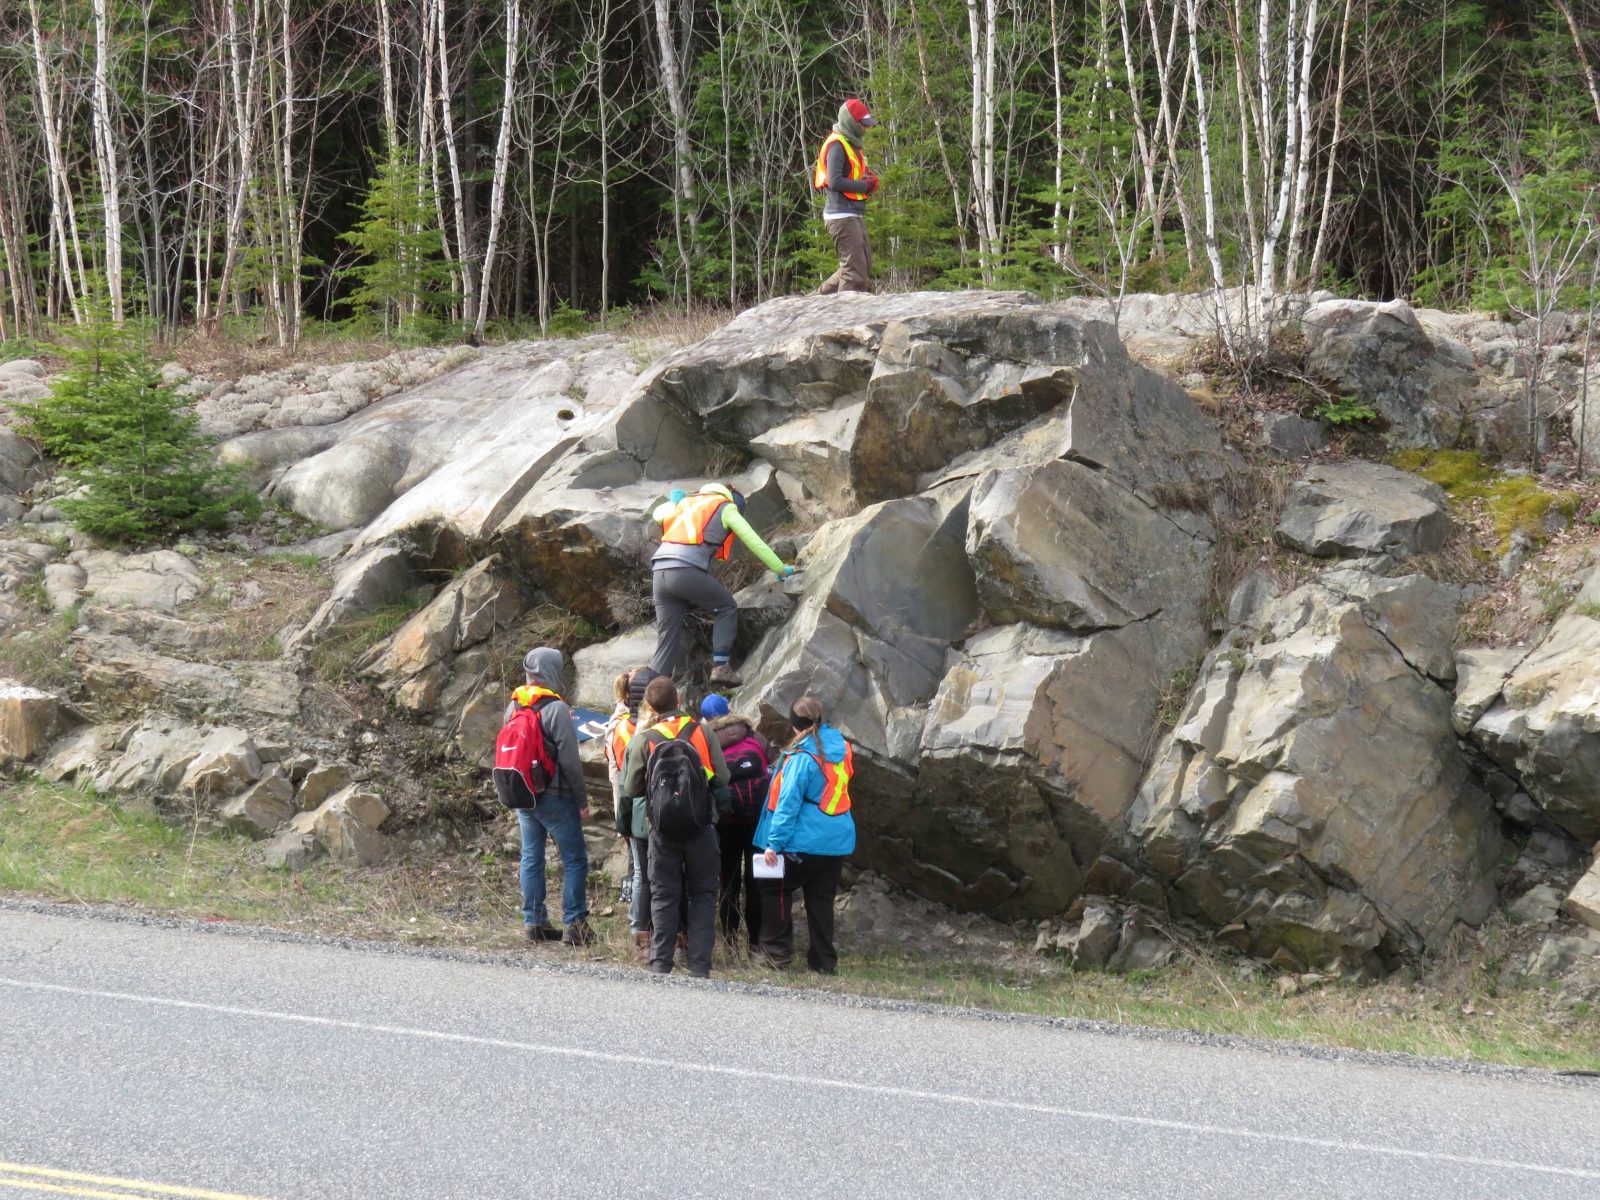 Students climbing rocks